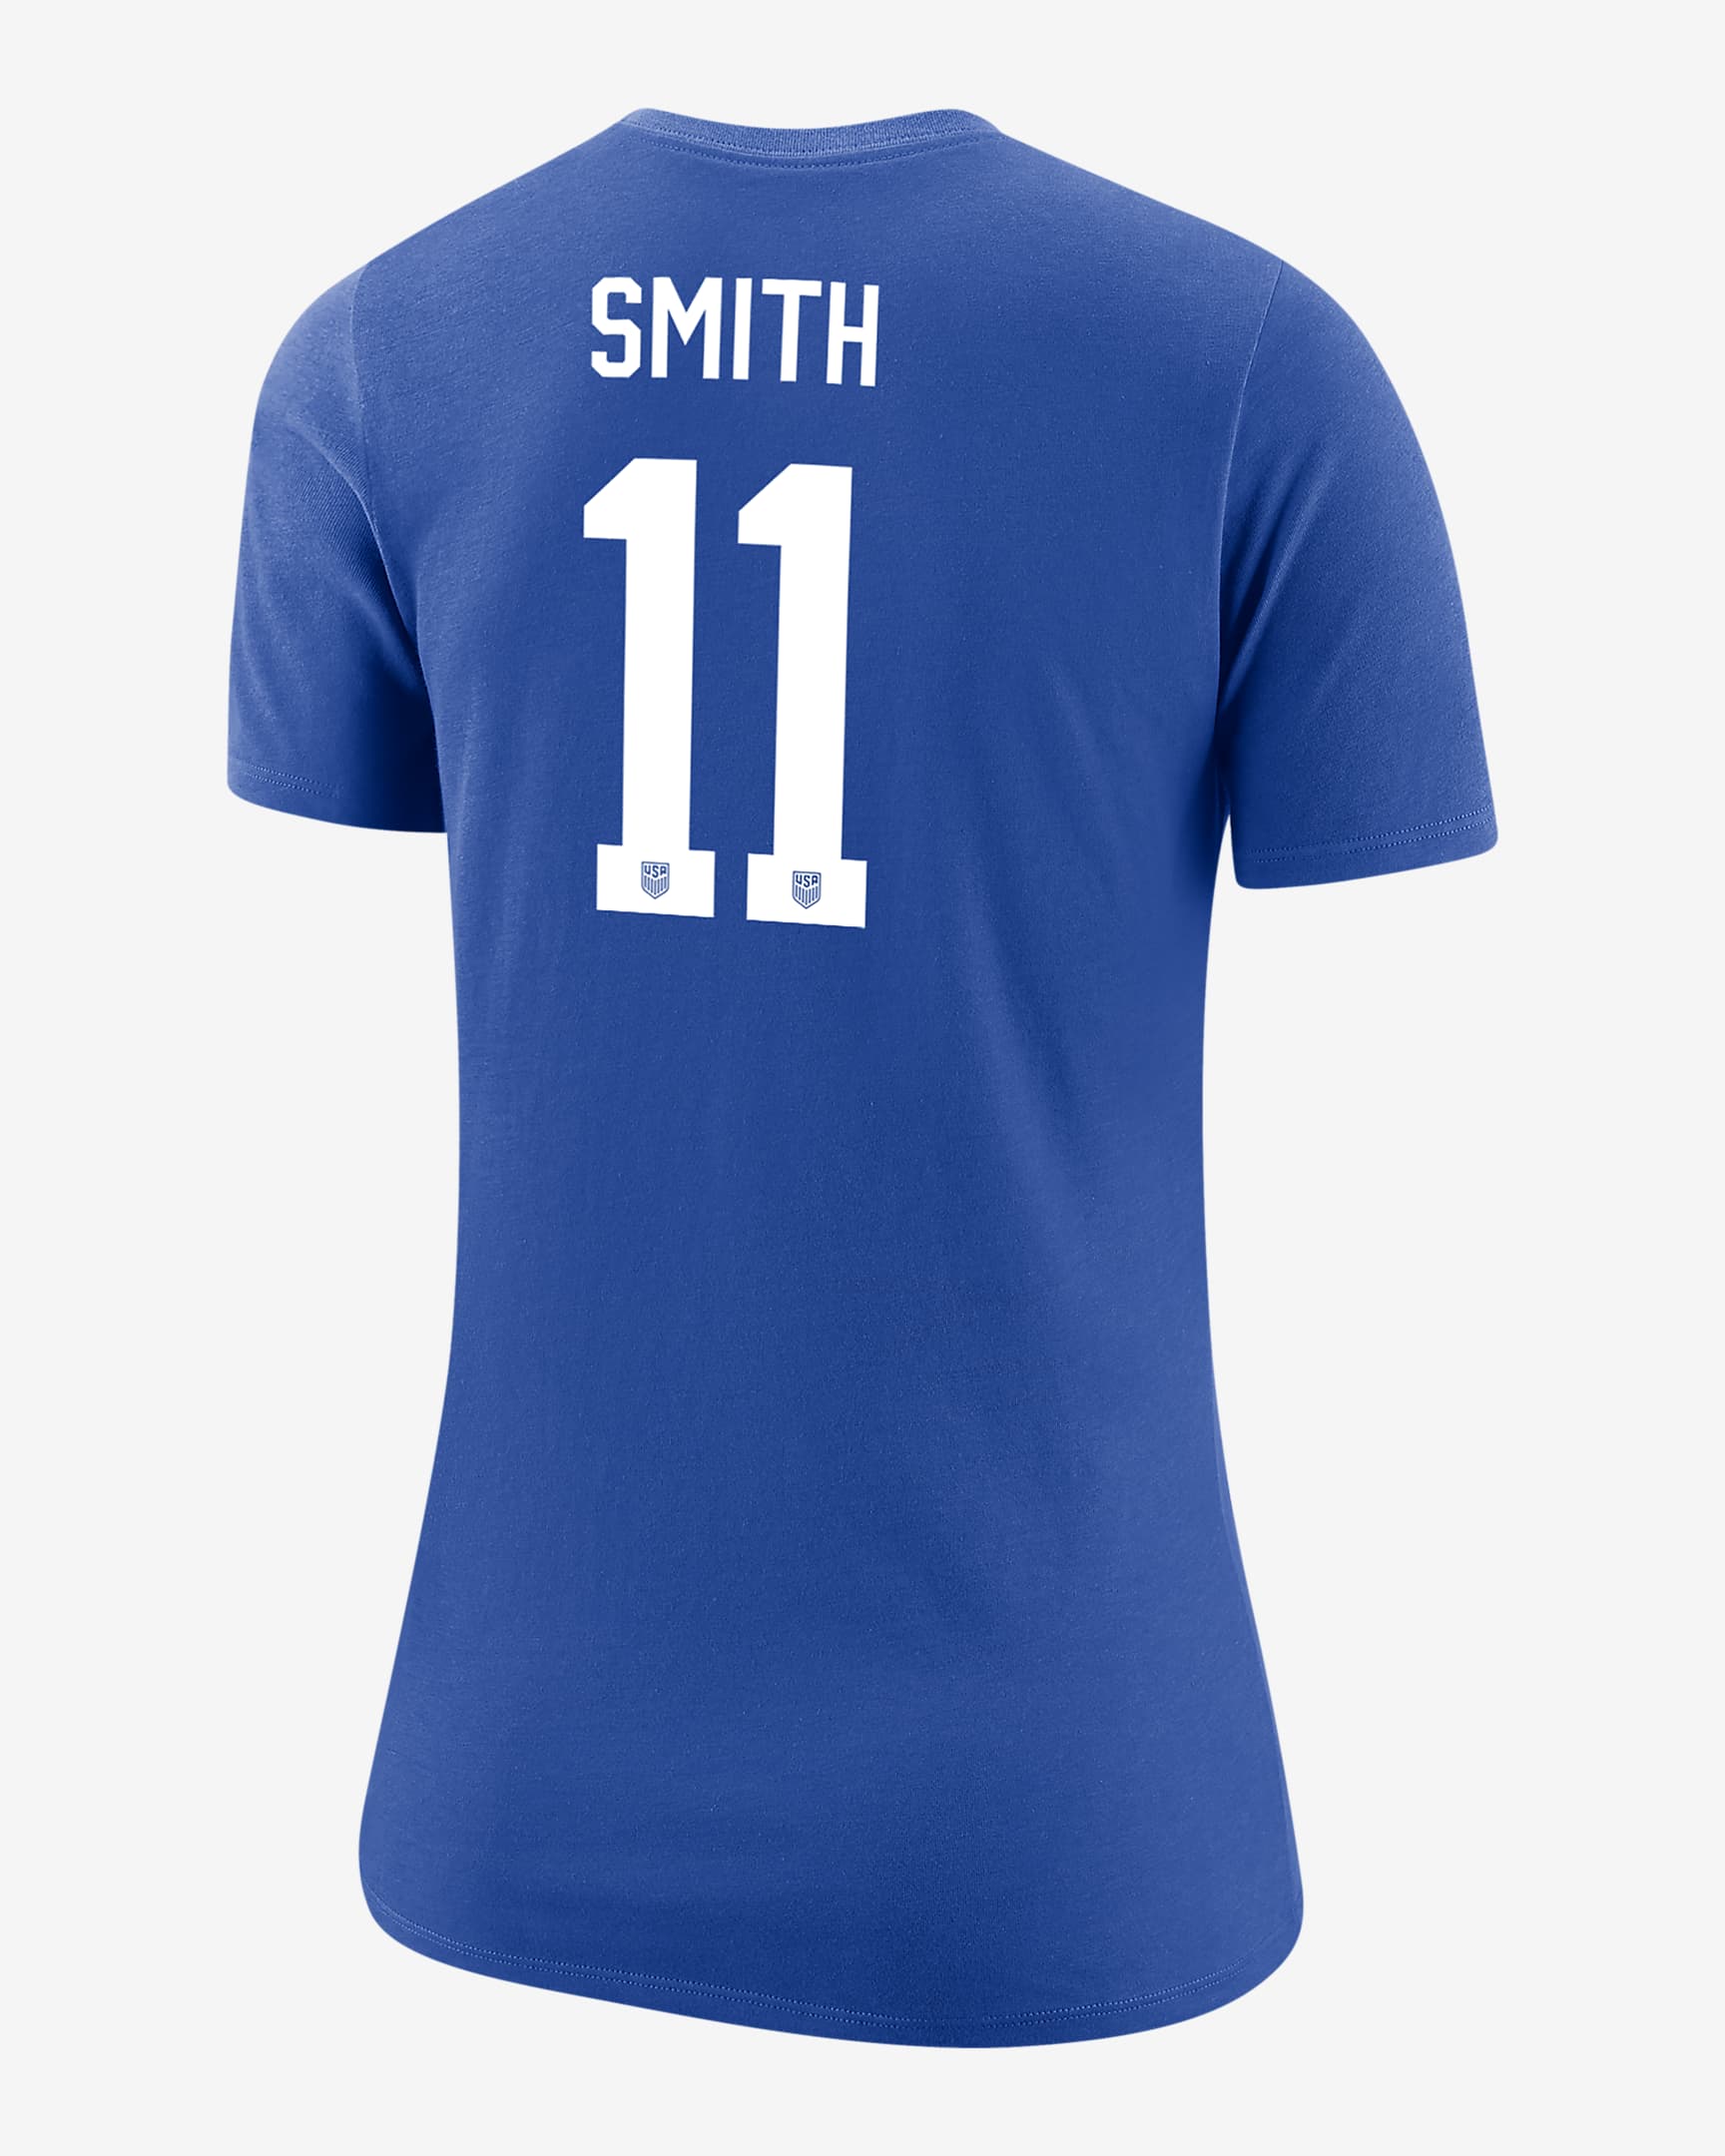 Sophia Smith USWNT Women's Nike Soccer T-Shirt. Nike.com